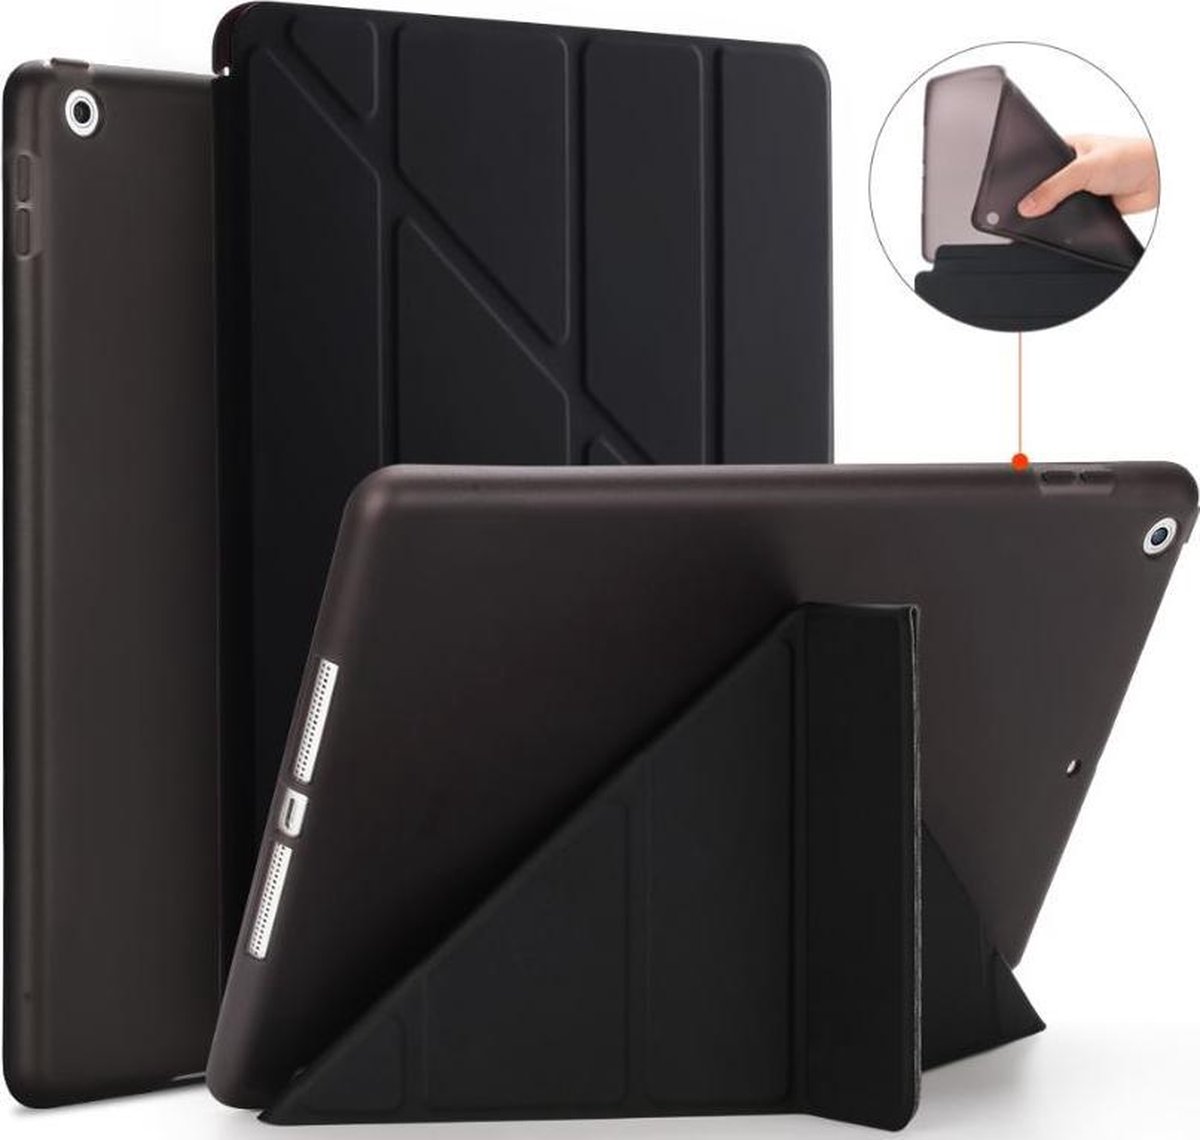 Tablet Hoes geschikt voor iPad Hoes 2019 - Air 3 - 10.5 inch - Smart Cover - A2152 - A2123 - A2154 - Zwart